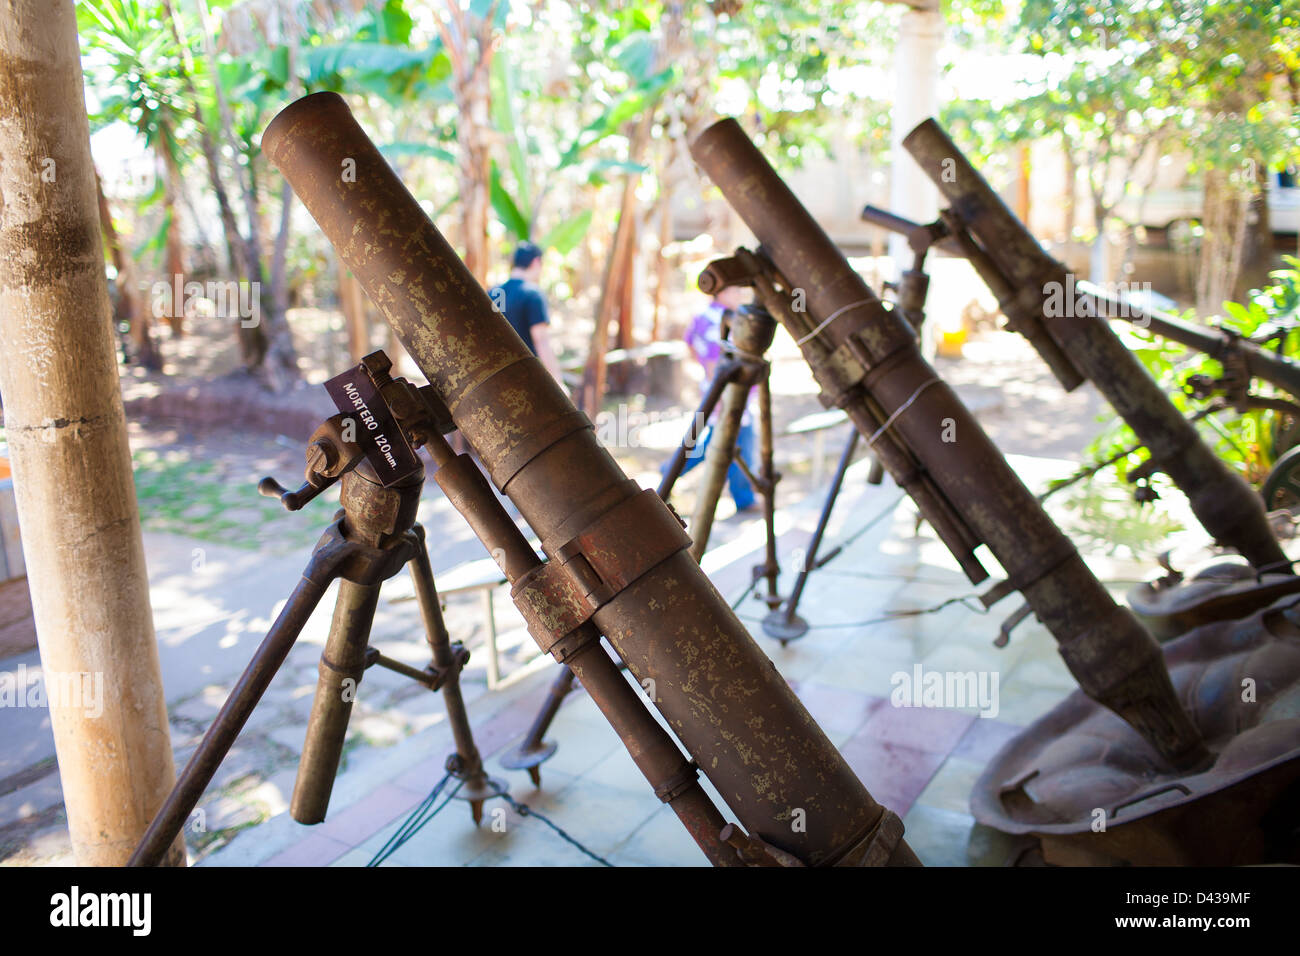 Homemade 120mm mortars on display at the Civil war museum in Perquin, El Salvador Stock Photo